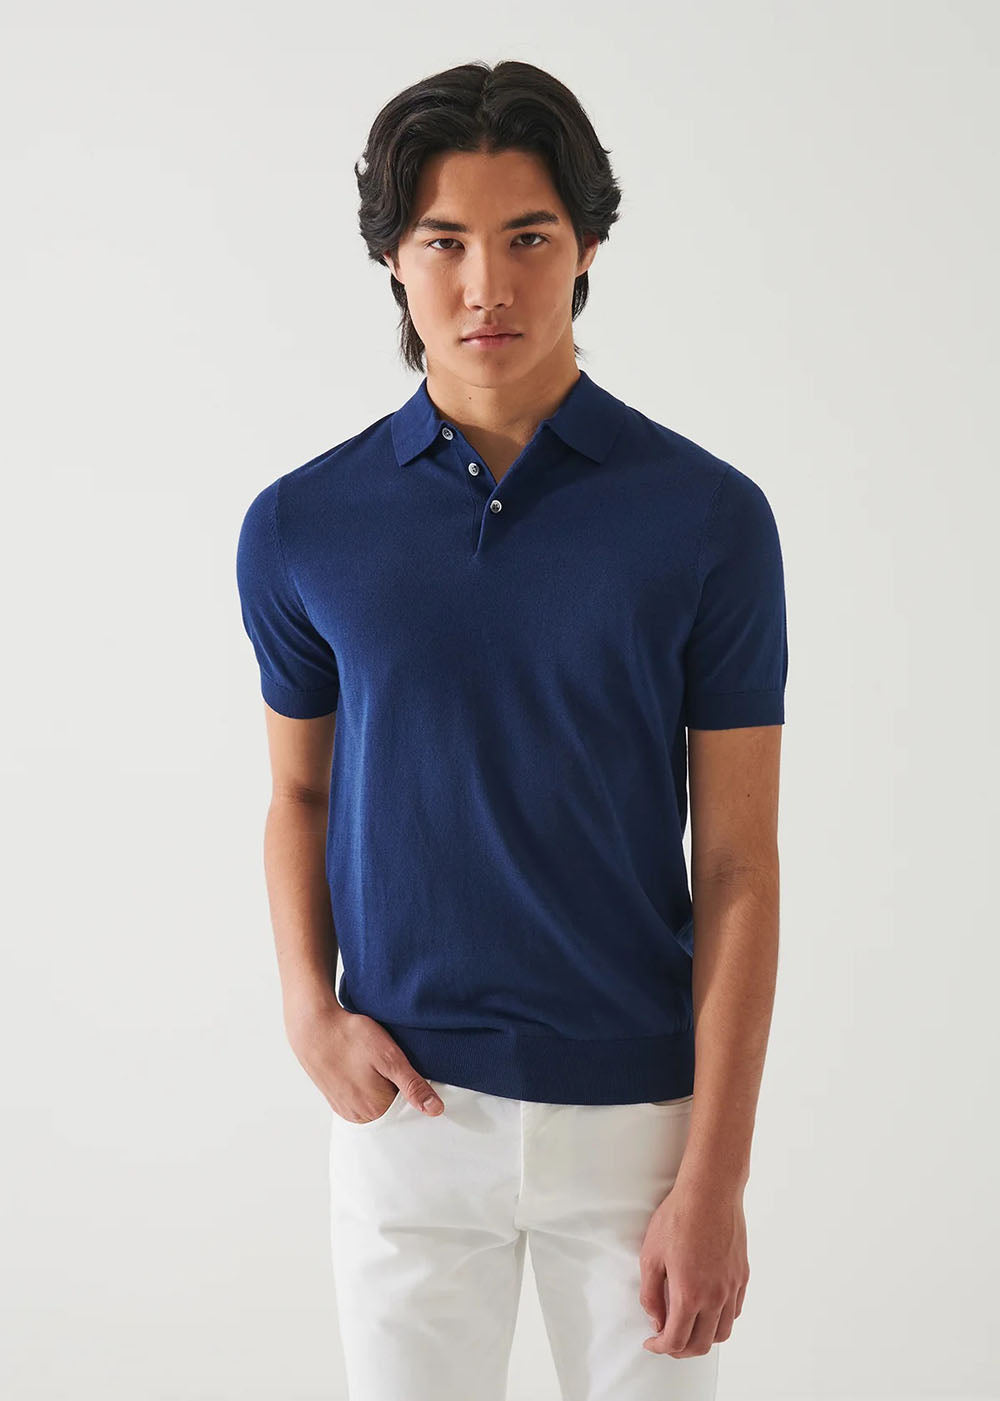 Cotton Cupro 3 Button Polo T-Shirt - Navy - Patrick Assaraf - Danali - P154P15R